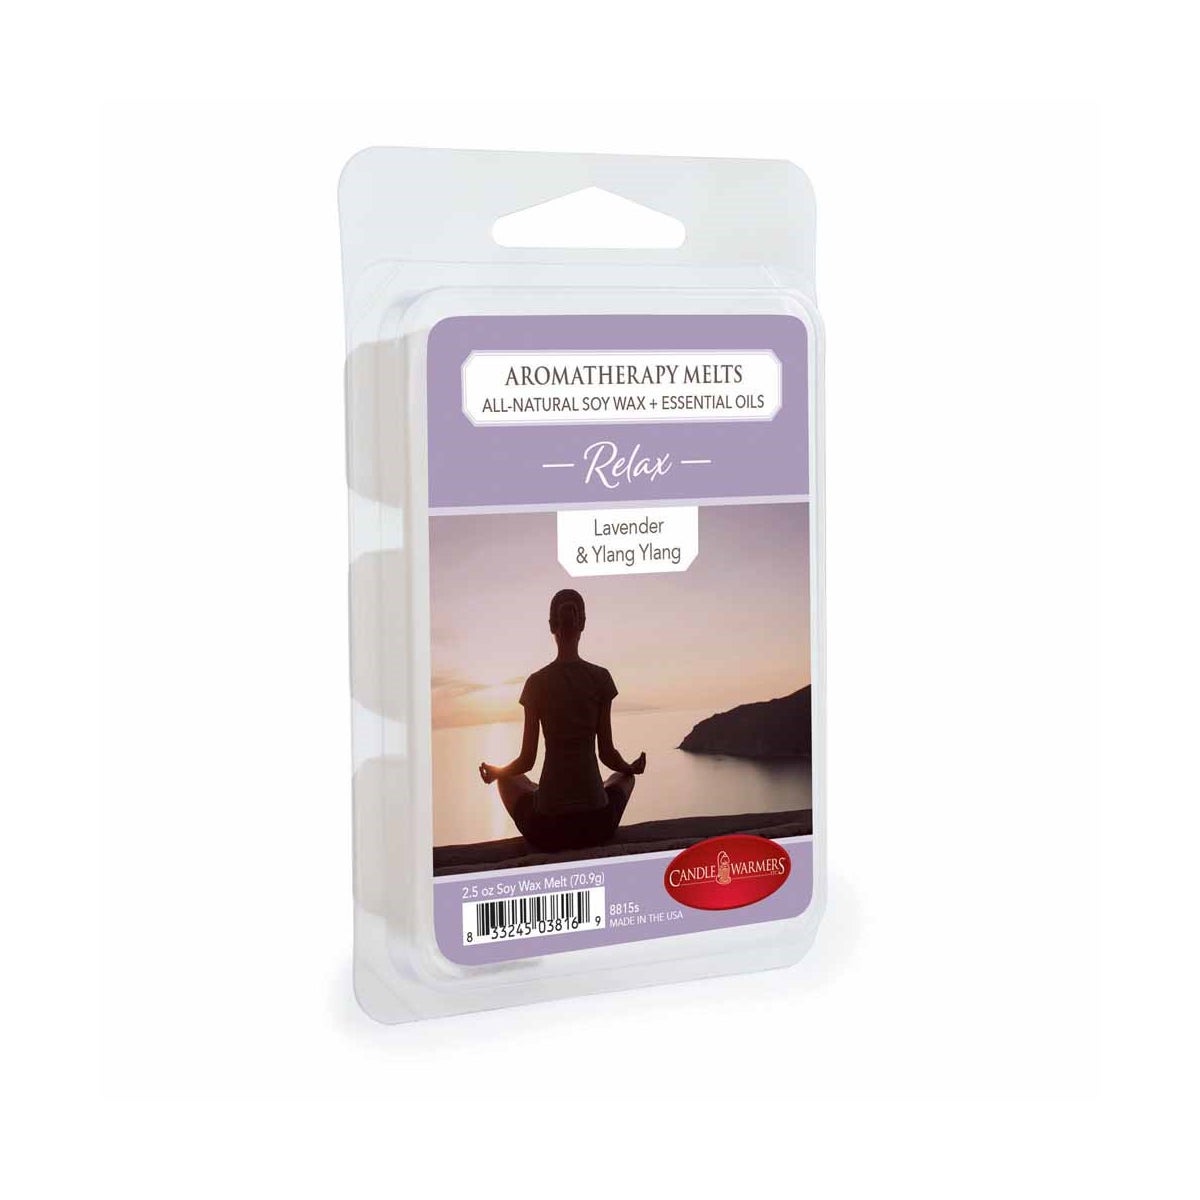 Aromatherapy Wax Melts 2.5 oz - Relax